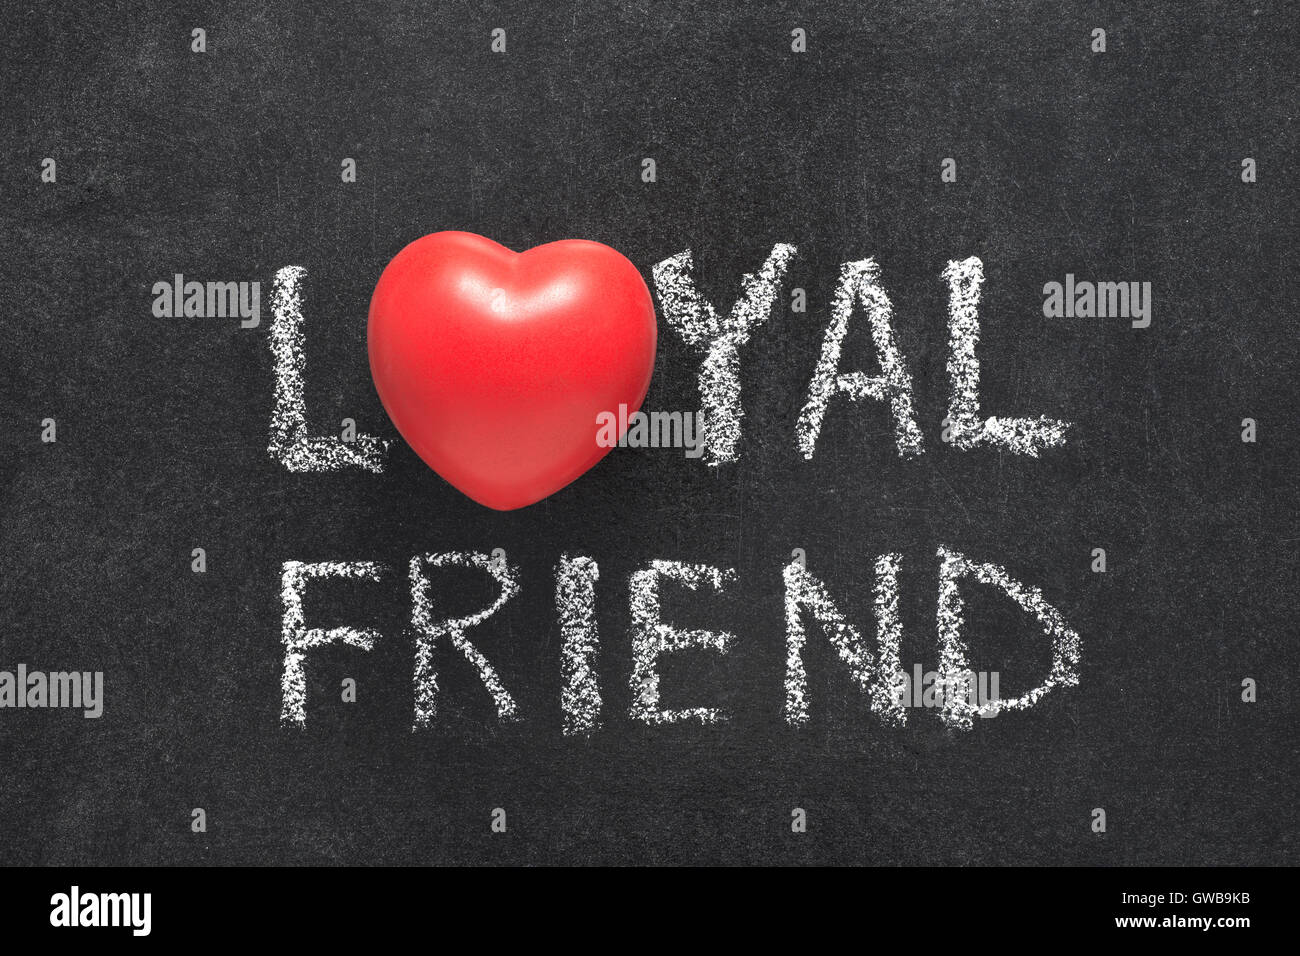 loyal friend phrase handwritten on blackboard with heart symbol instead of O Stock Photo